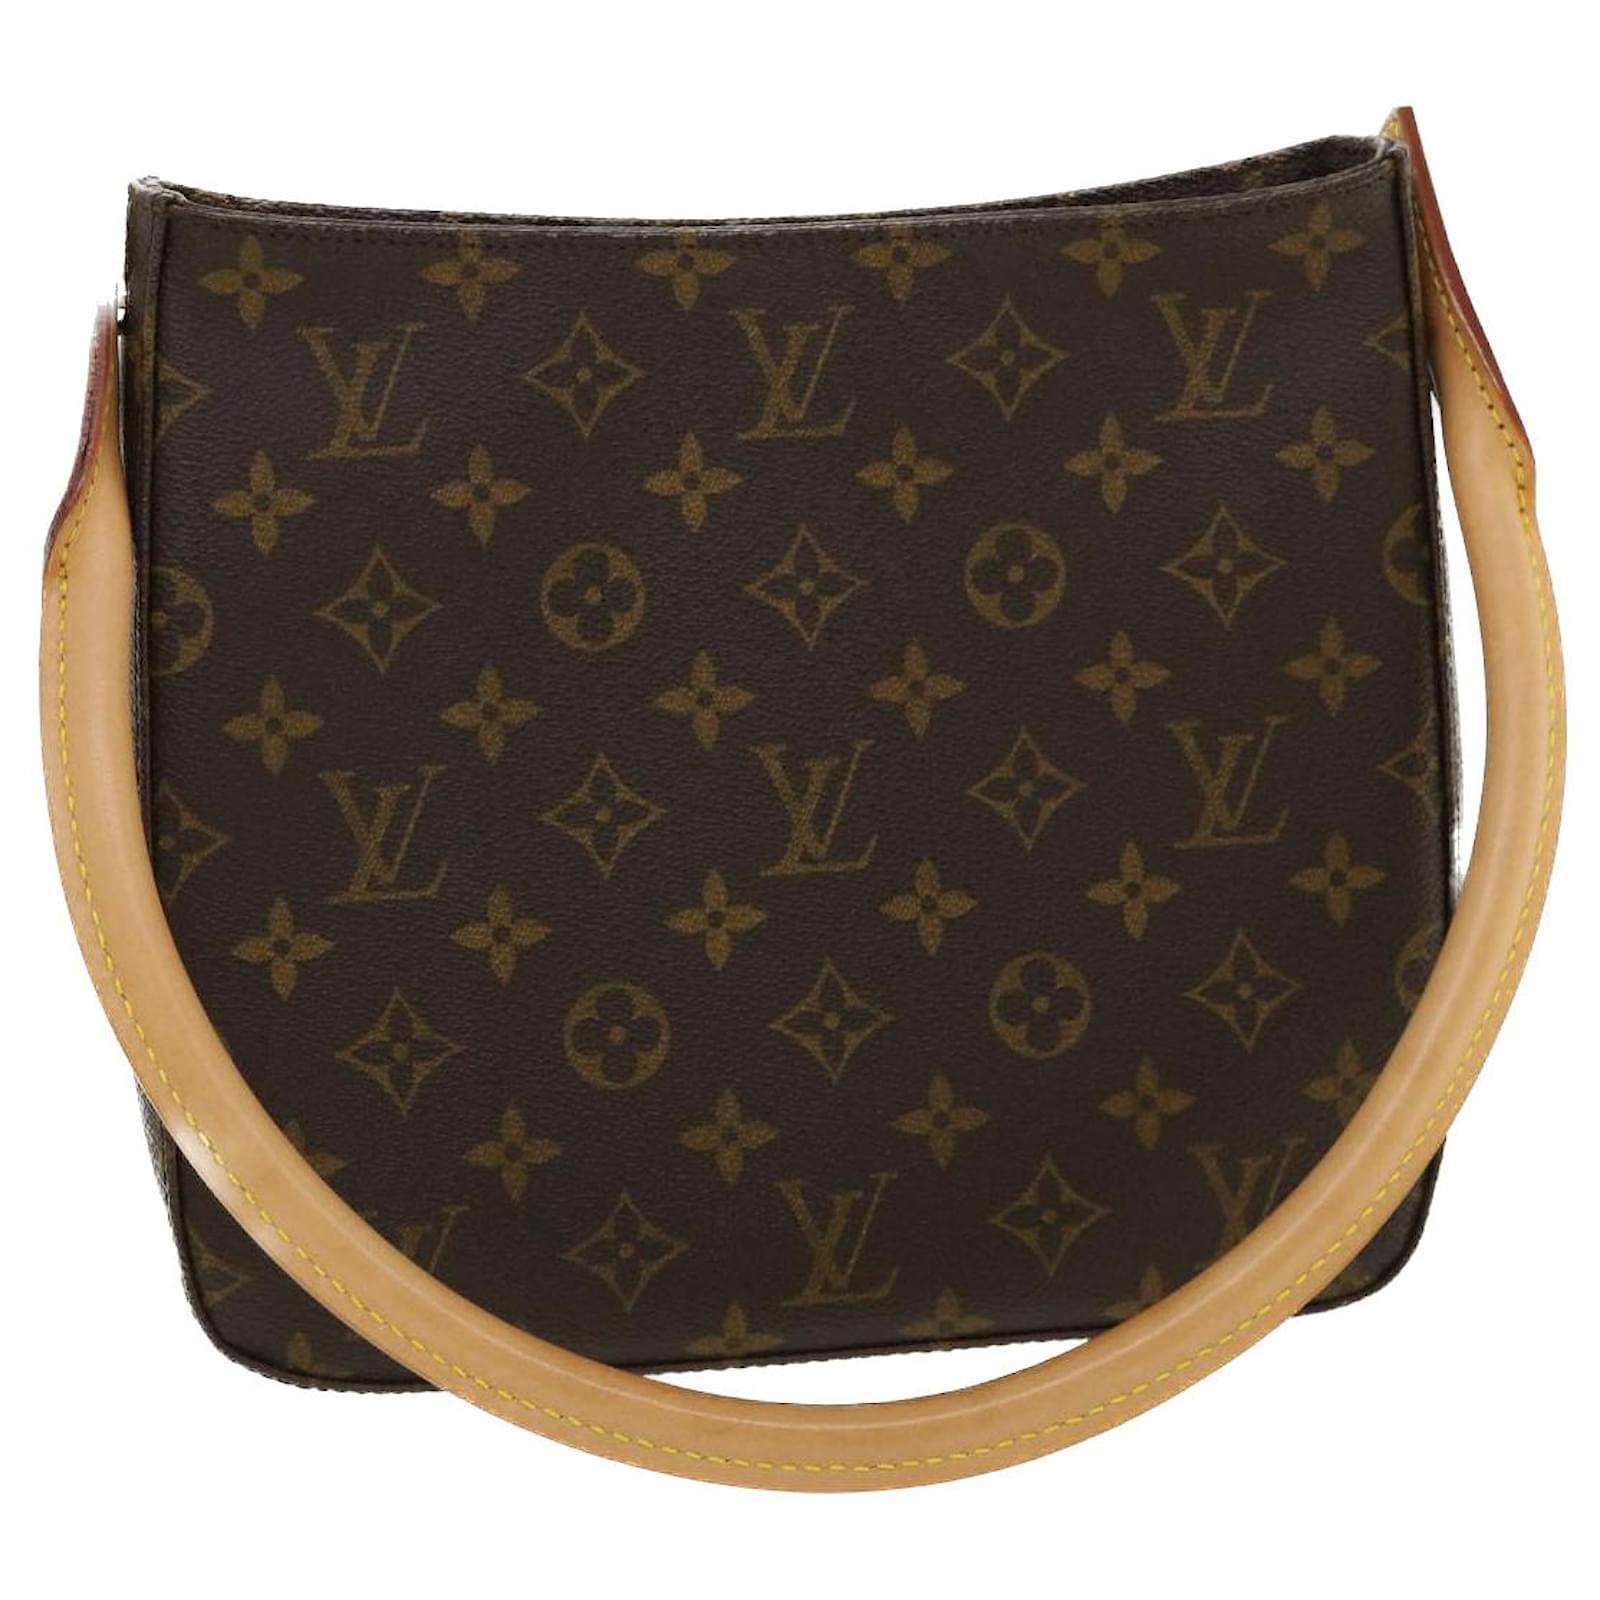 Authentic Louis Vuitton Monogram Looping MM Shoulder Bag